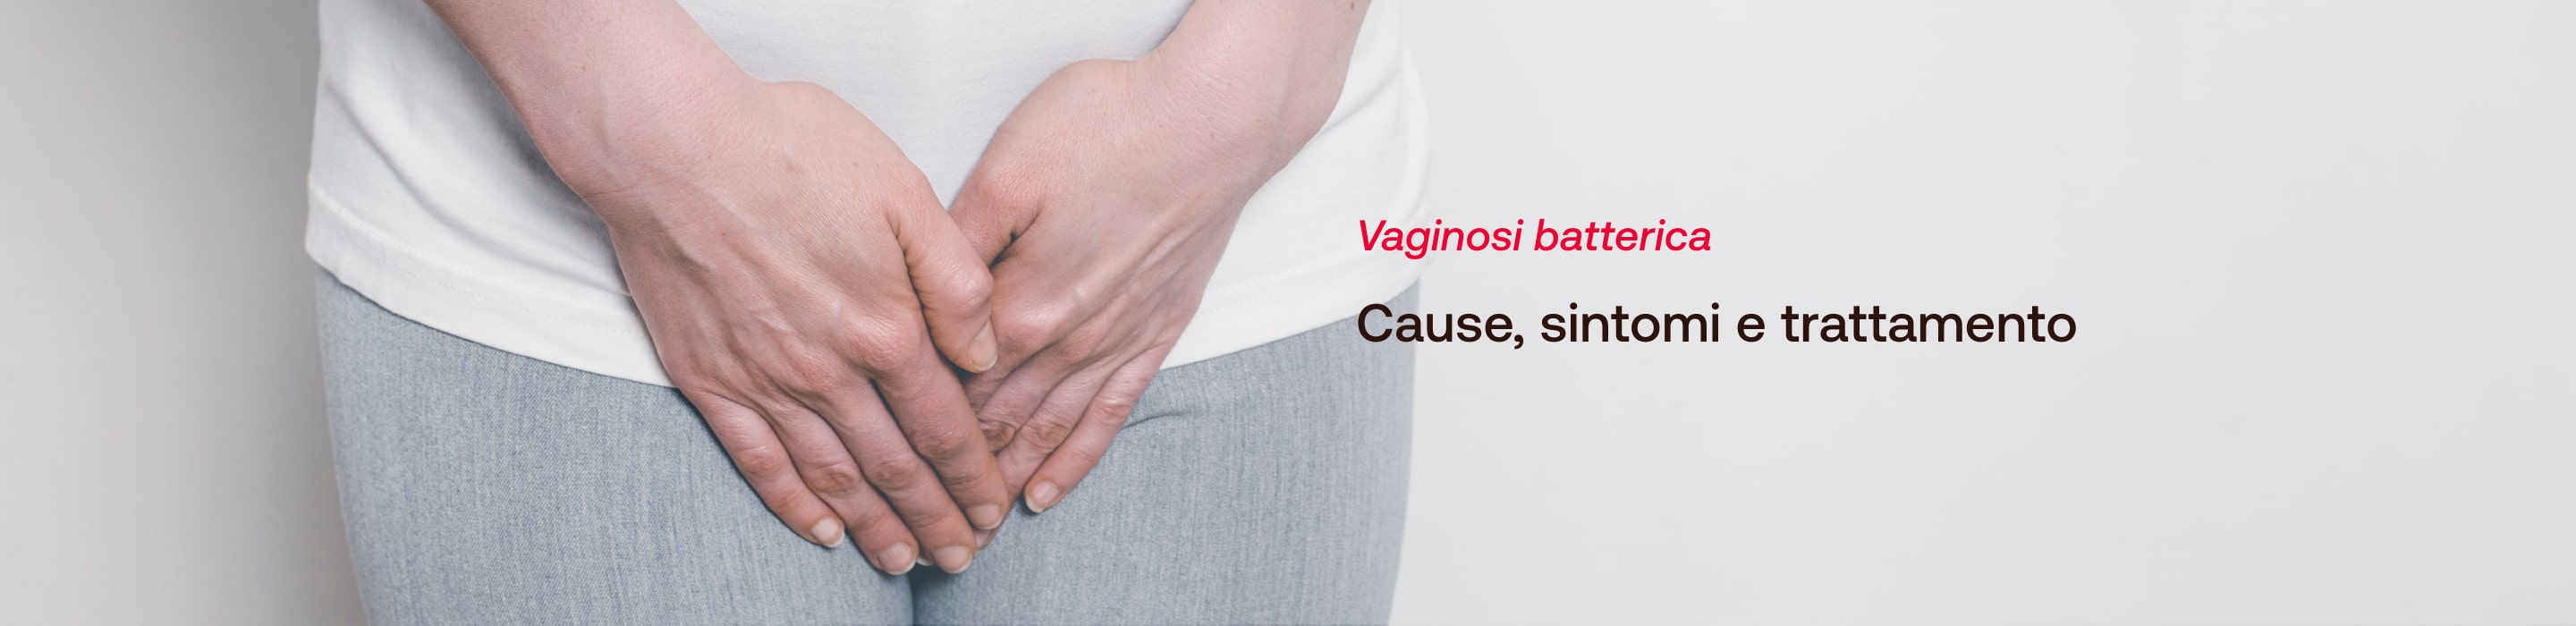 Vaginosi batterica - GUIDA - Redcare